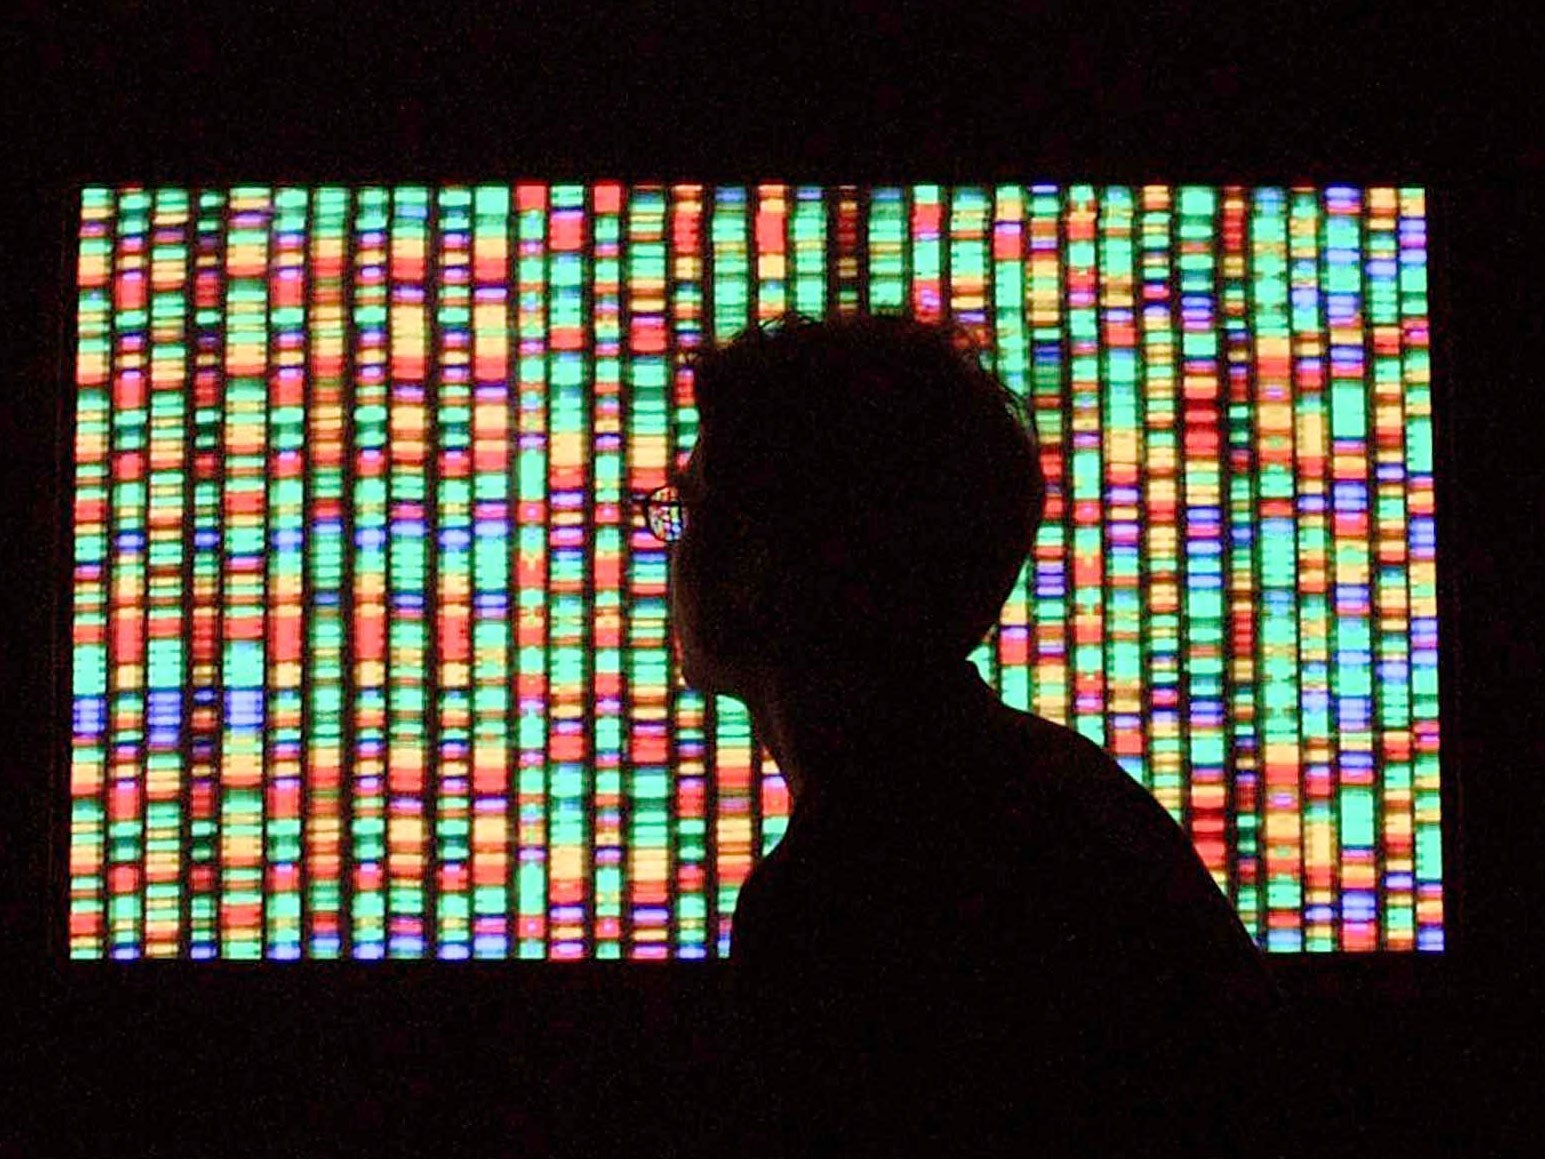 A man looks at a visual representation of the human genome